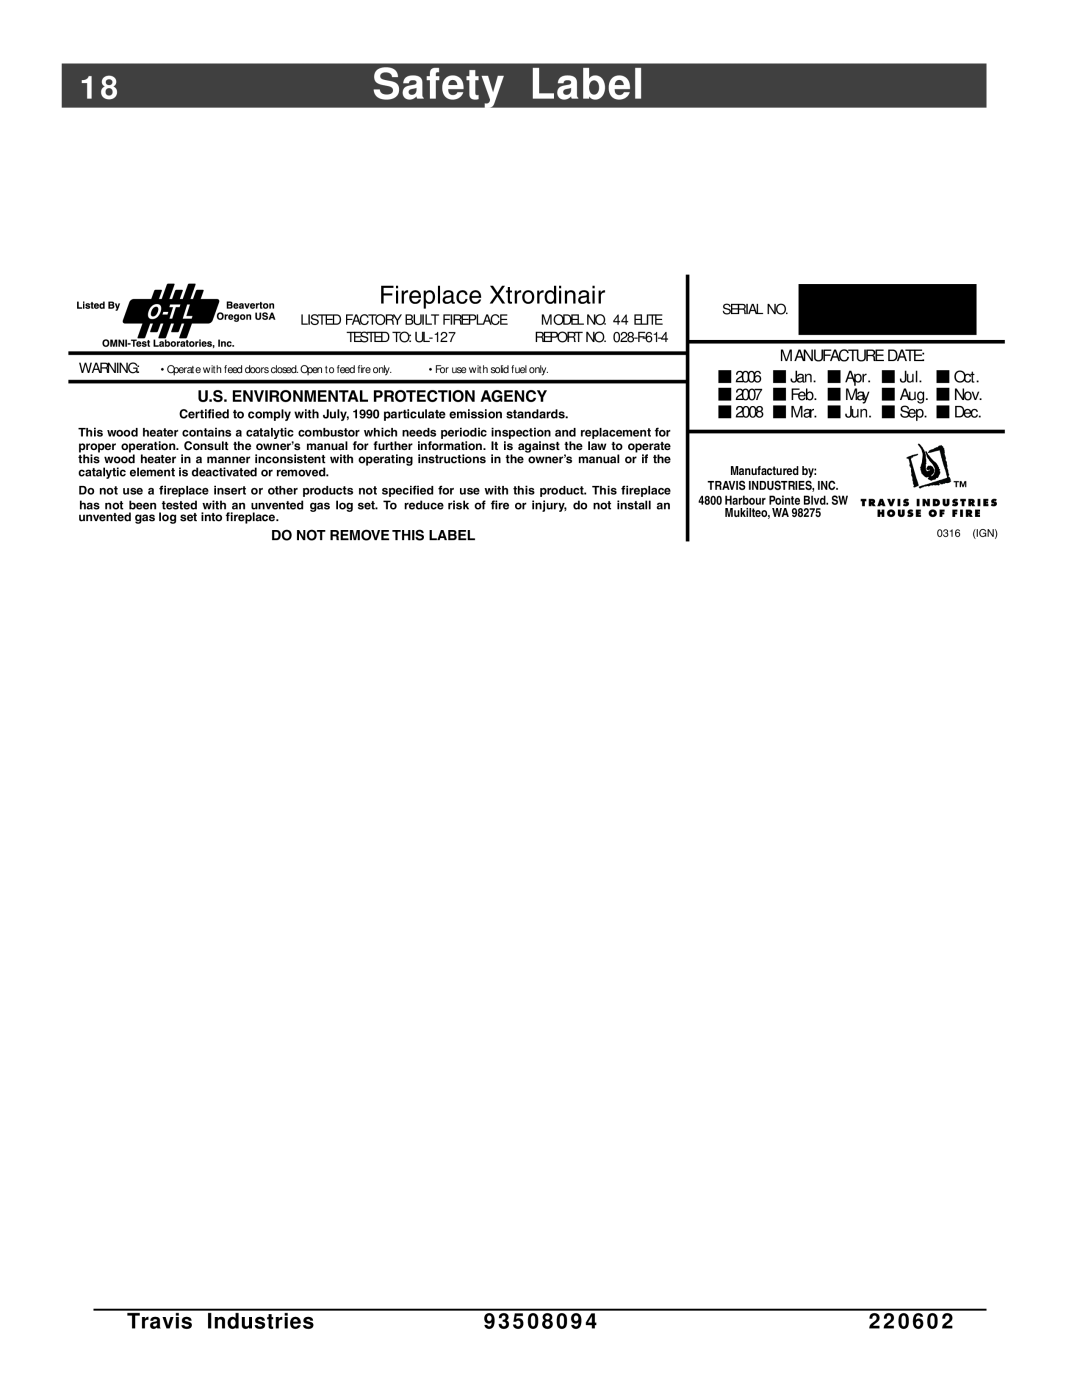 FireplaceXtrordinair 44-Elite owner manual Safety Label, Fireplace Xtrordinair, Travis Industries, 9 3 5 0 8, 2 2 0 6 